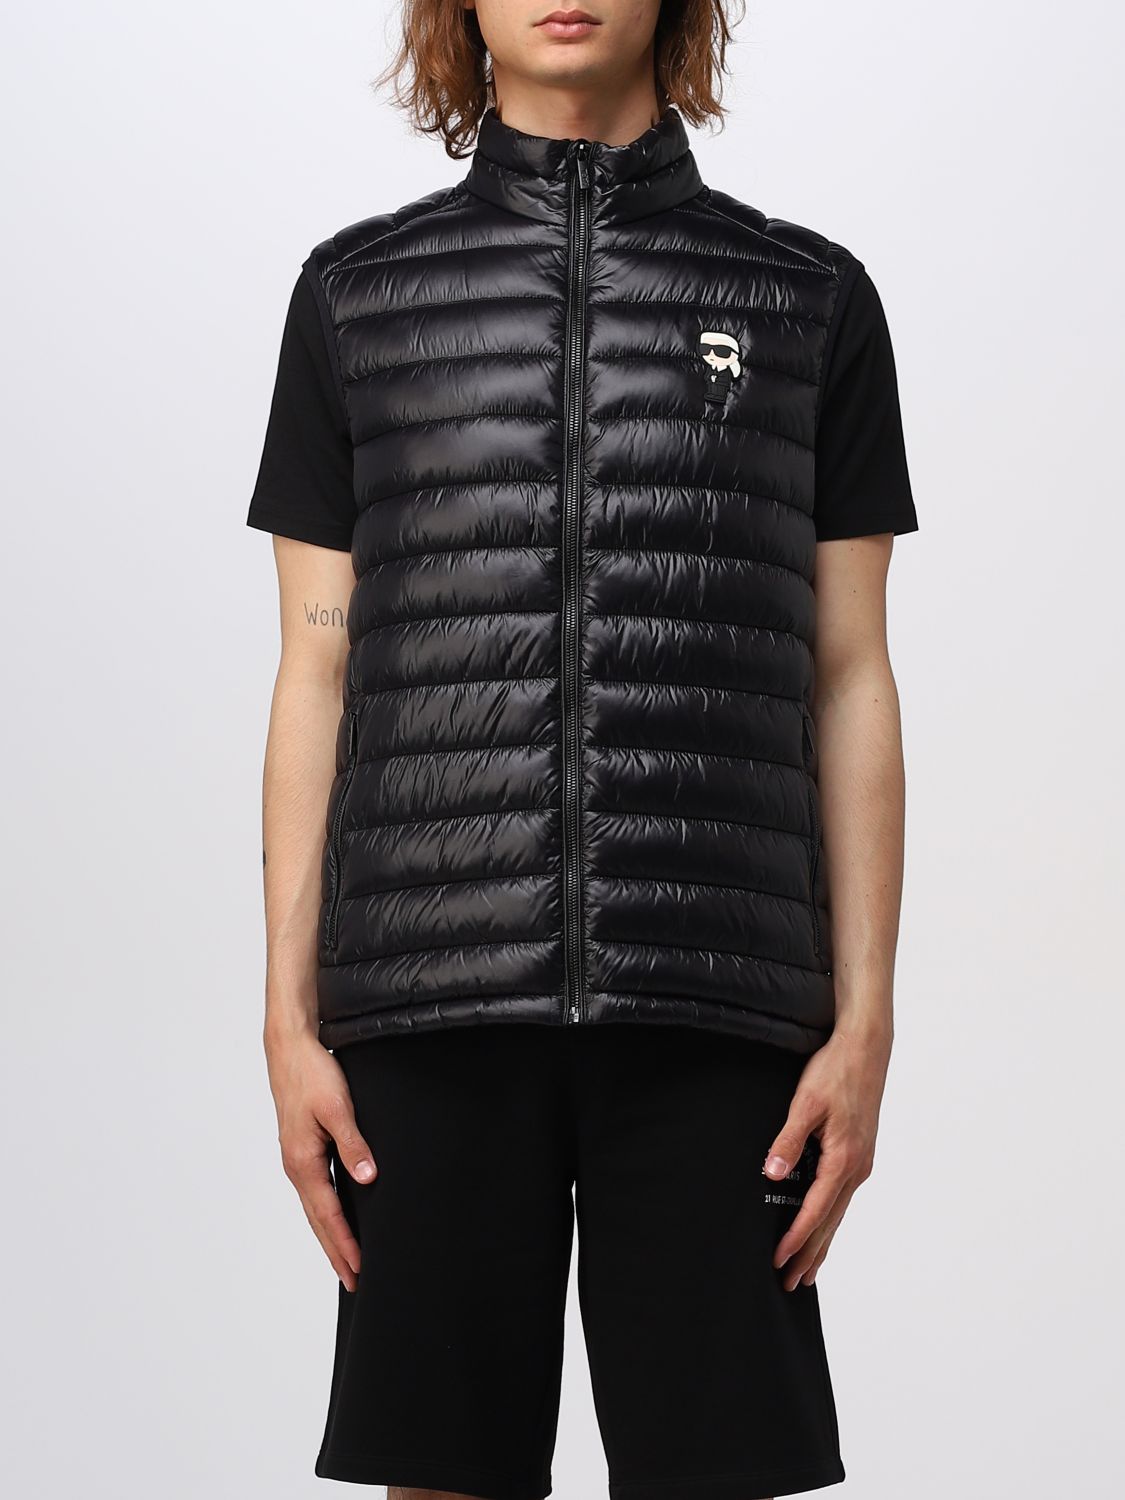 Beginner tactiek bezig KARL LAGERFELD: suit vest for man - Black | Karl Lagerfeld suit vest  505023500590 online on GIGLIO.COM